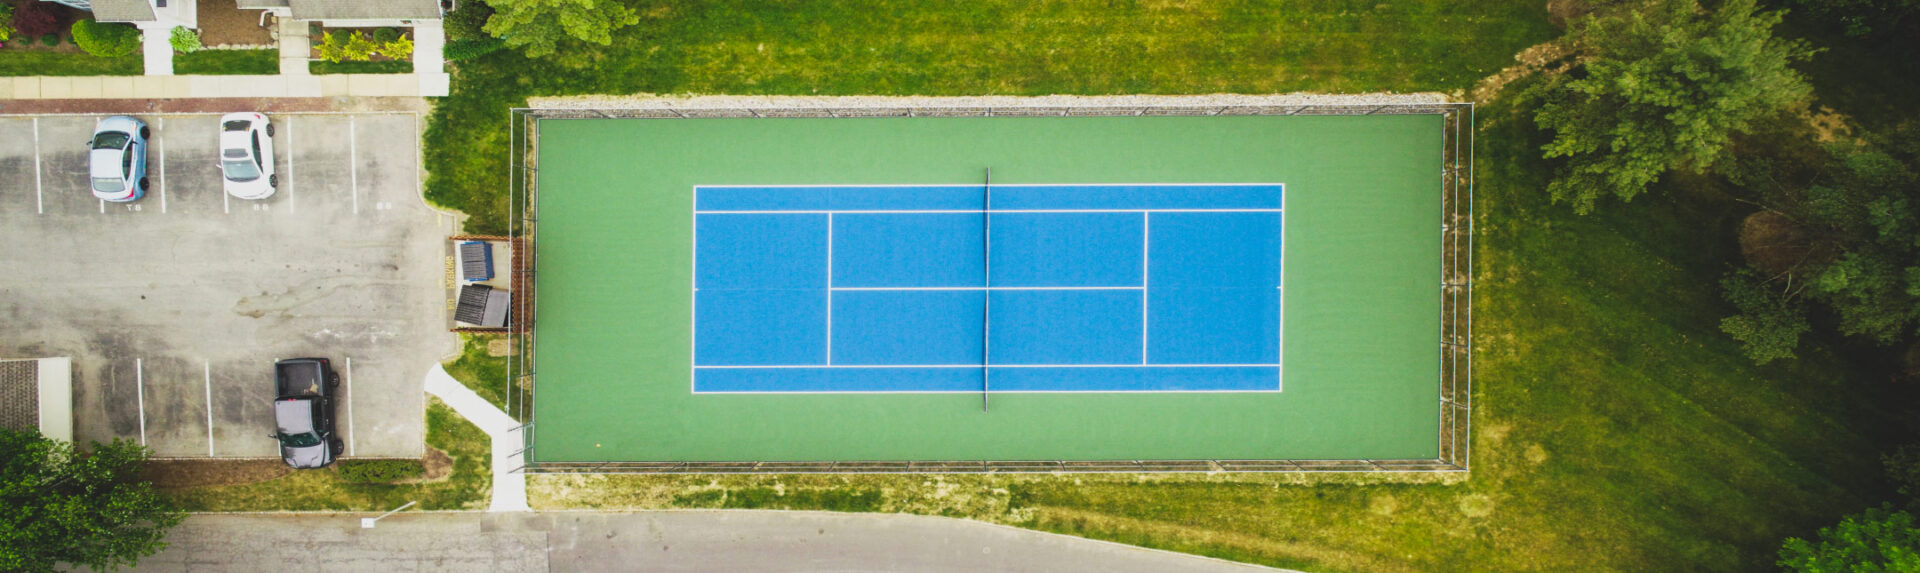 overhead image of tennis court